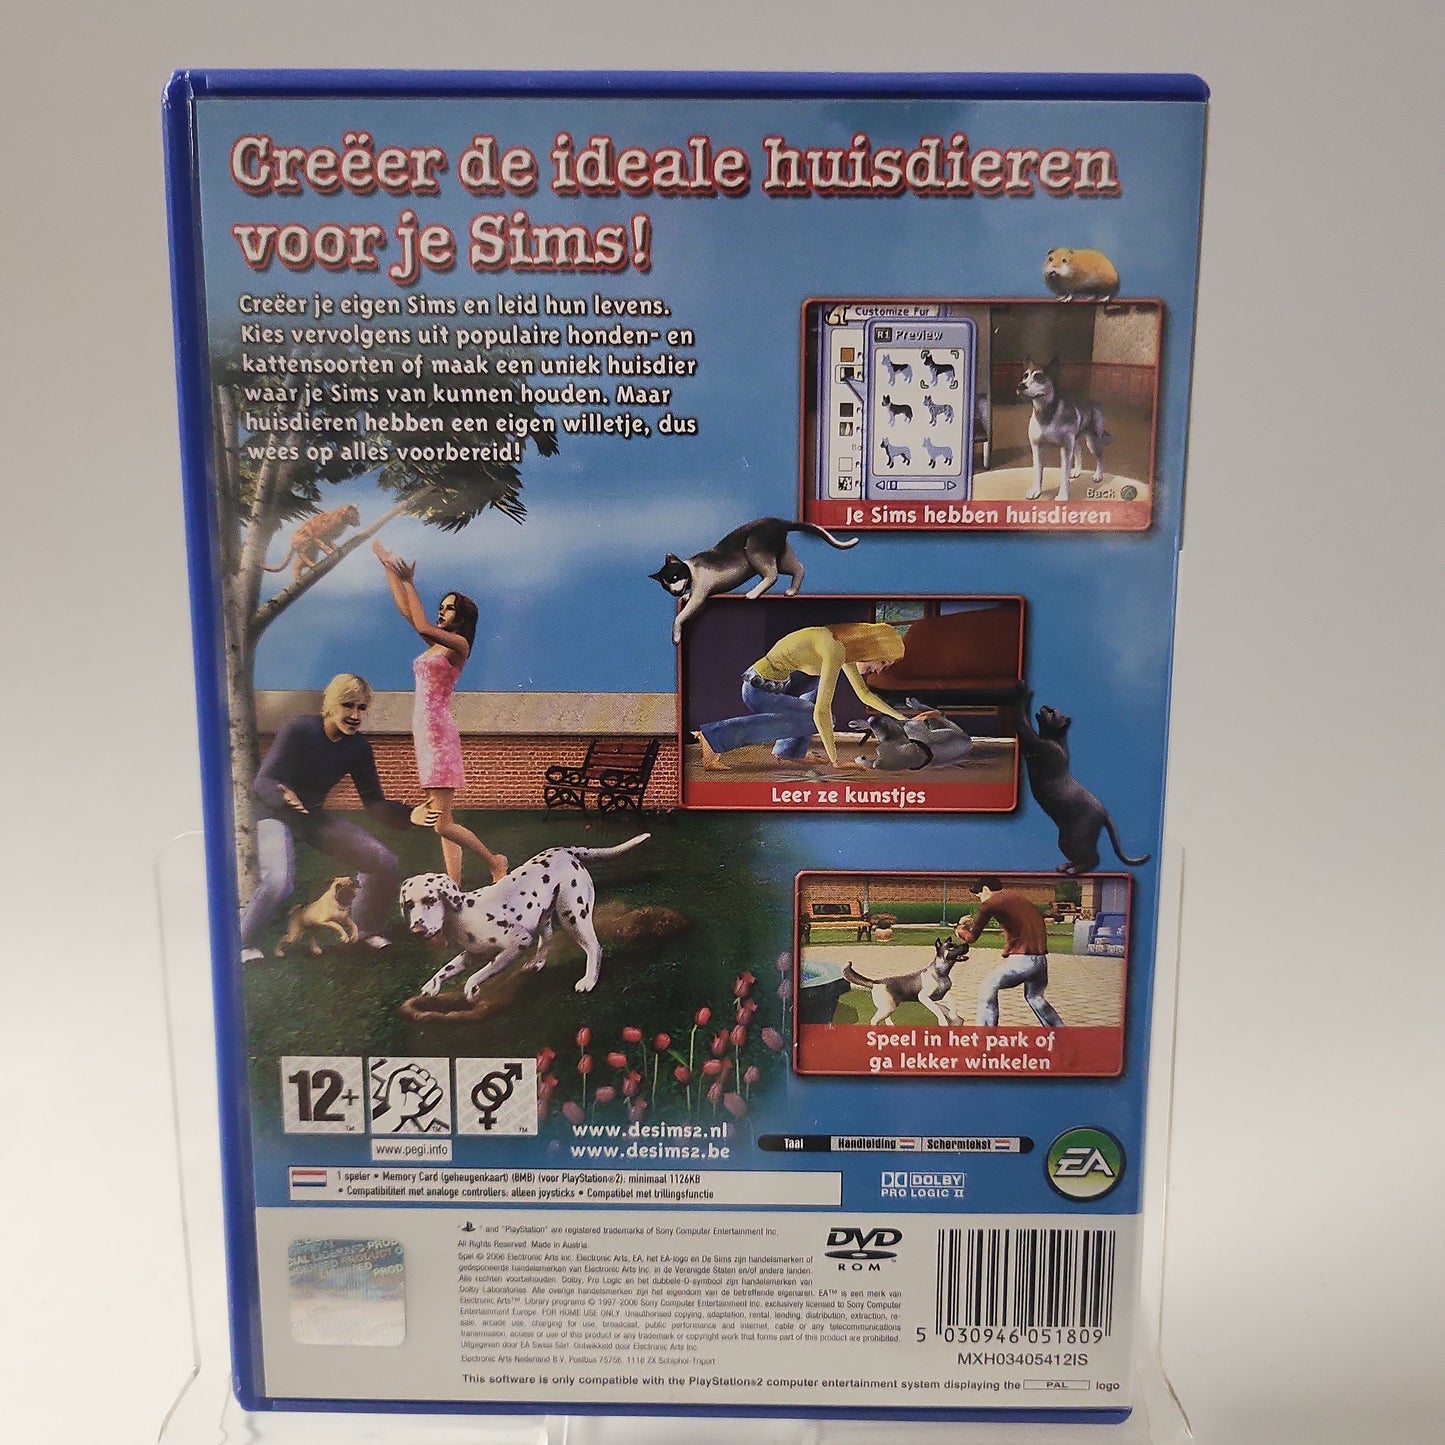 Die Sims 2 Haustiere Playstation 2